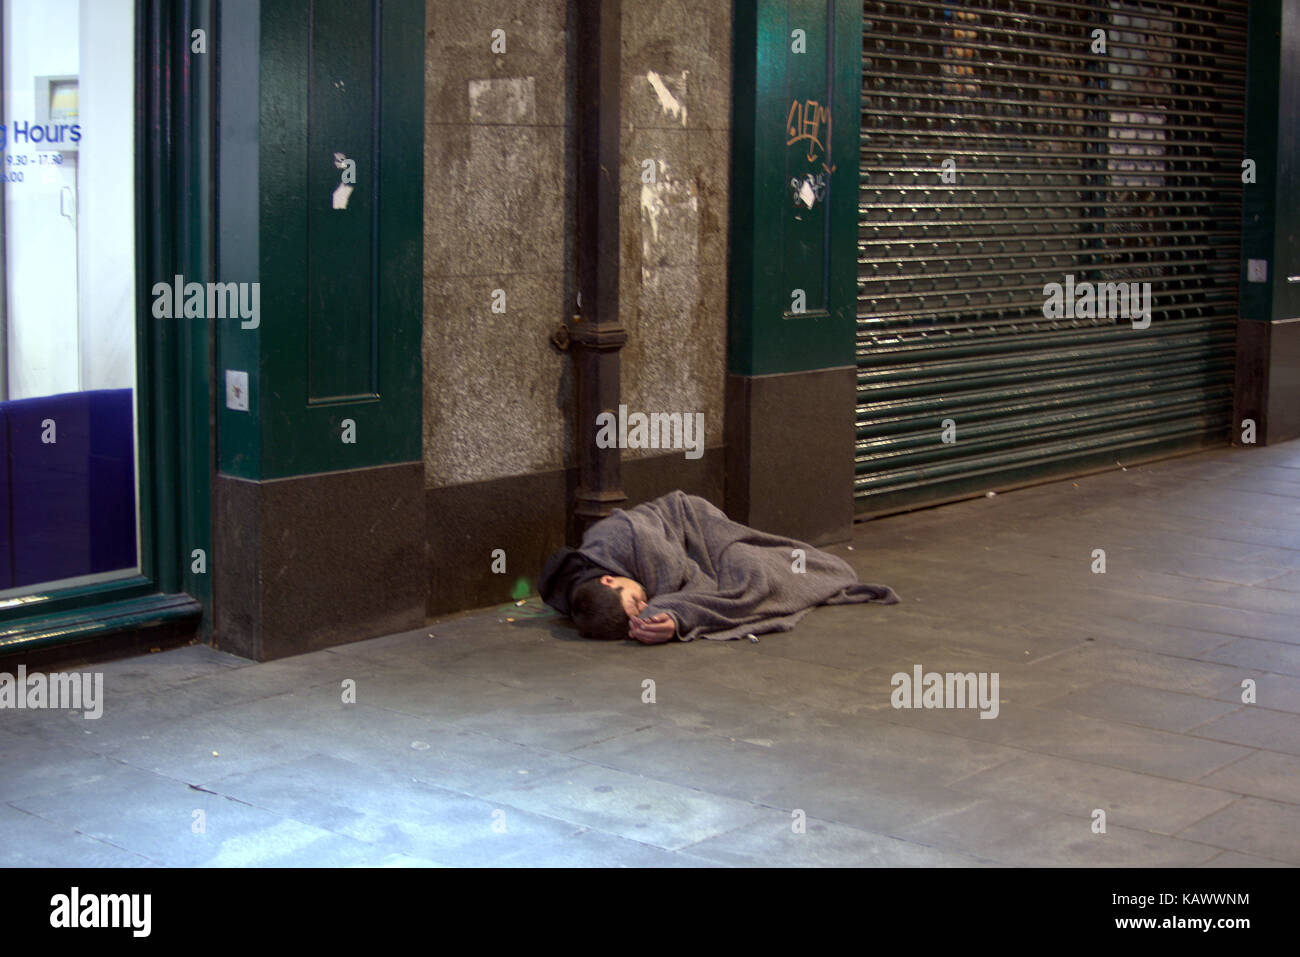 Hielanman's Umbrella highlanders umbrella Glasgow young homeless boy looks dead as he sleeps on ground unconscious as Stock Photo